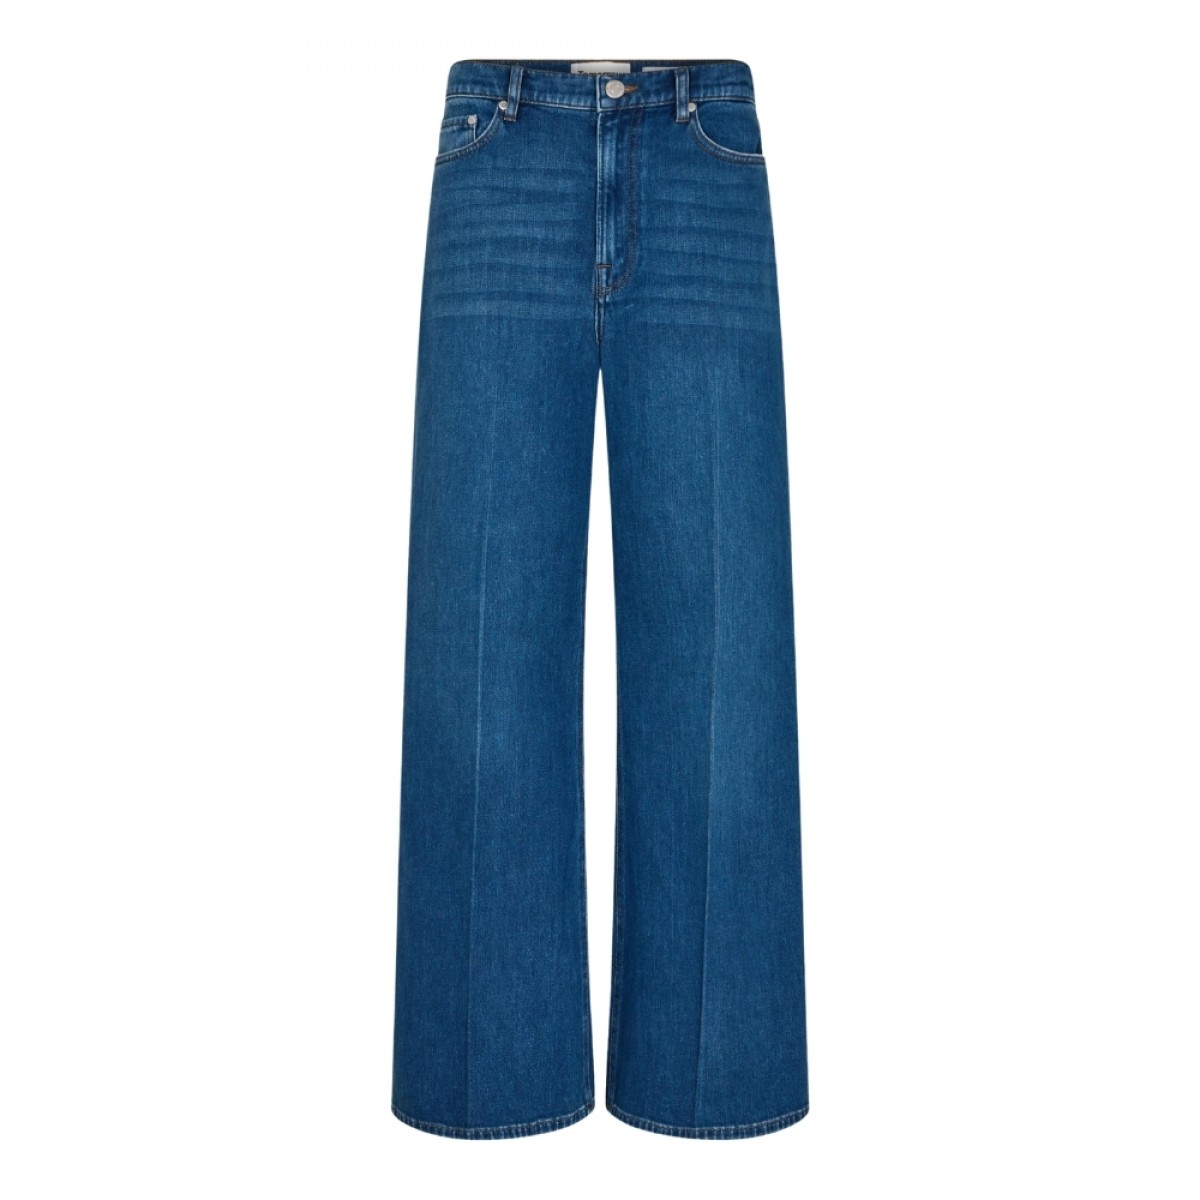 trw arizona jeans wash bilbao - denim blue - front